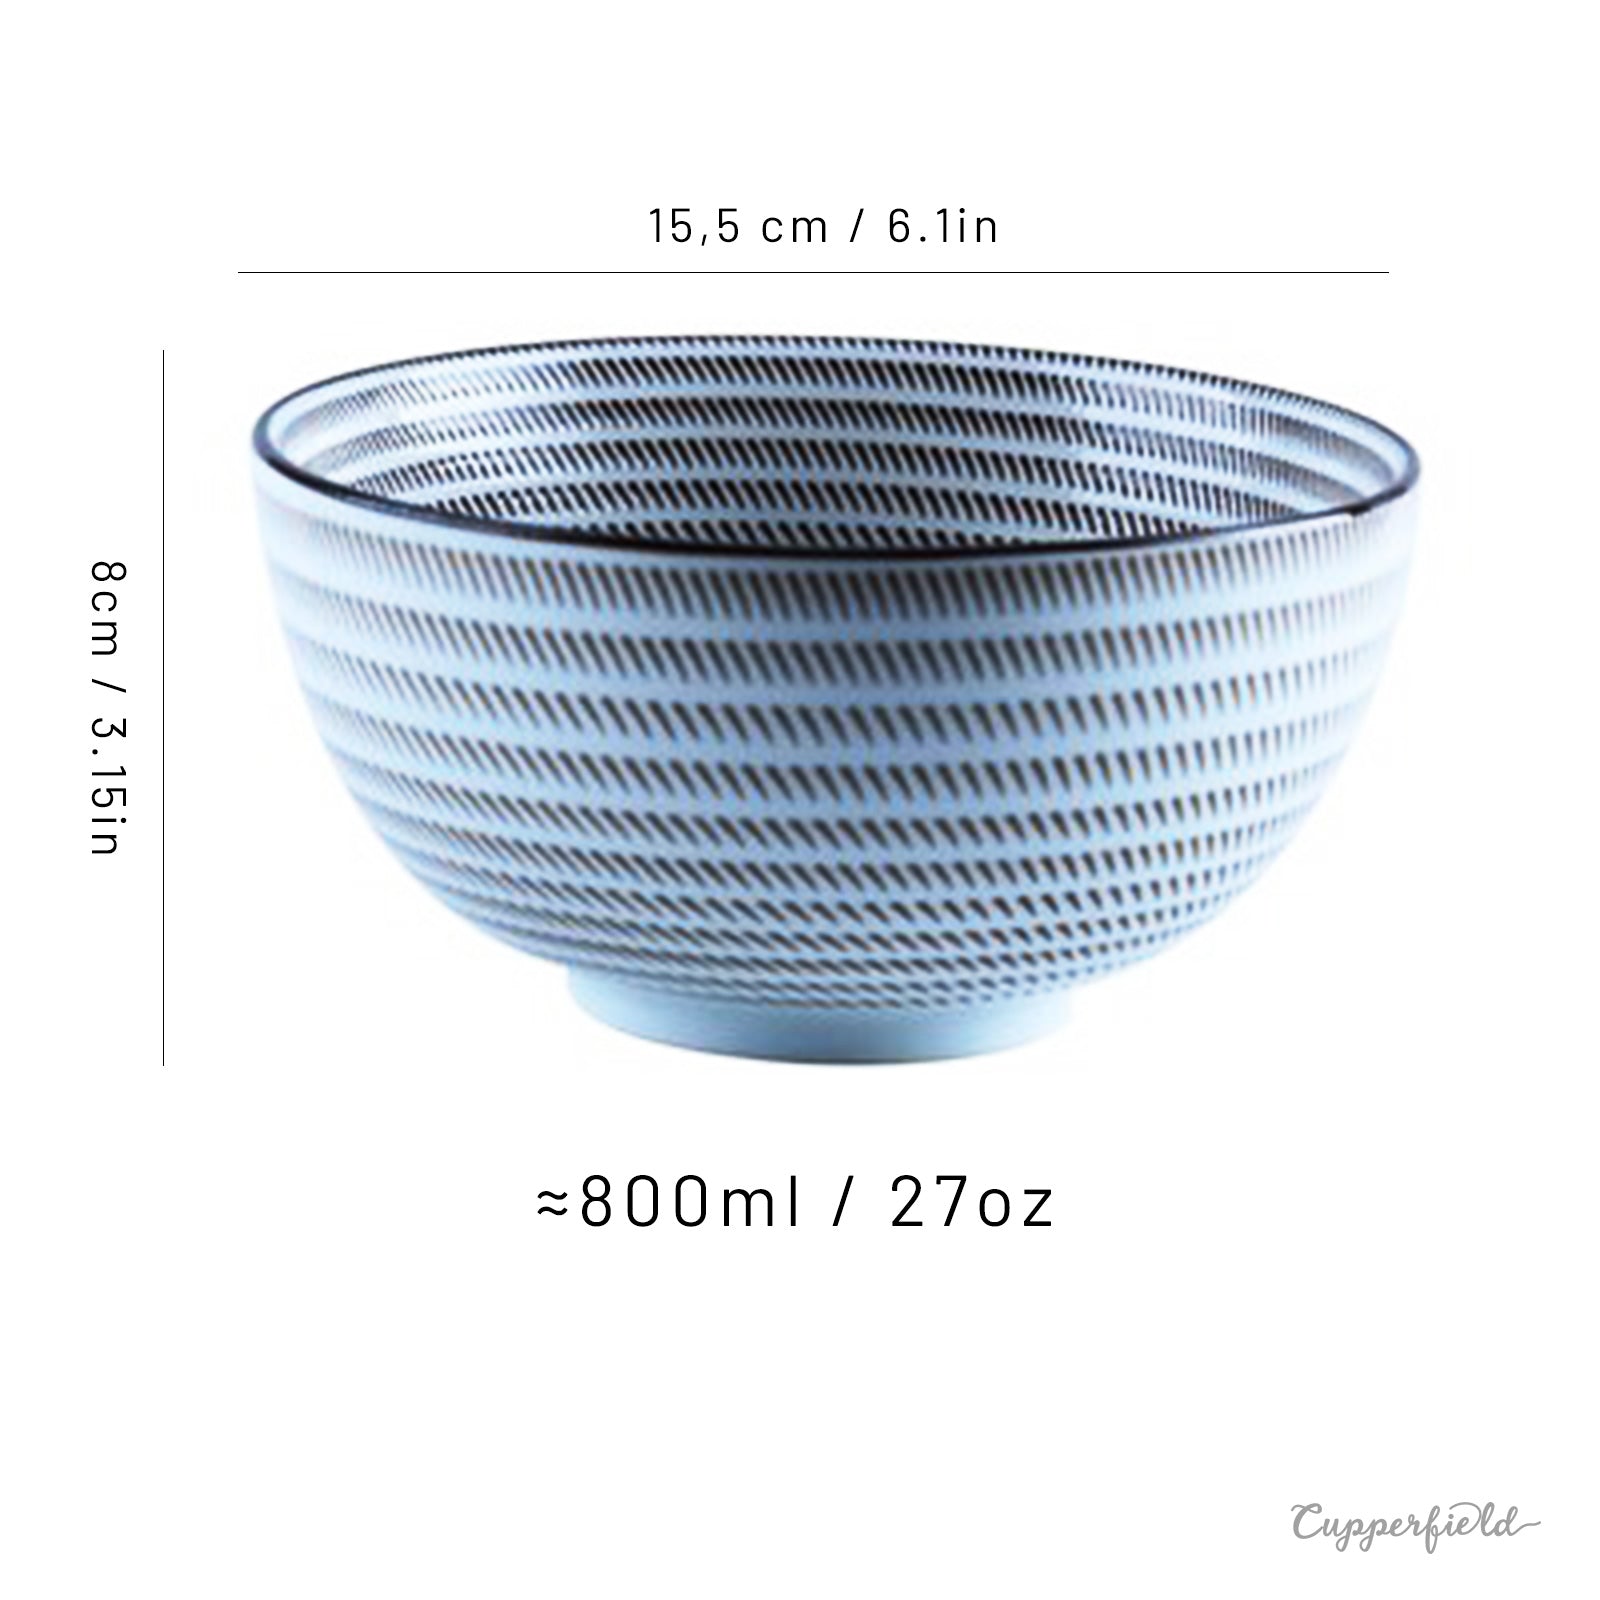 Versatile Minimalist Japanese Bowls (4 Styles, 4 Sizes)